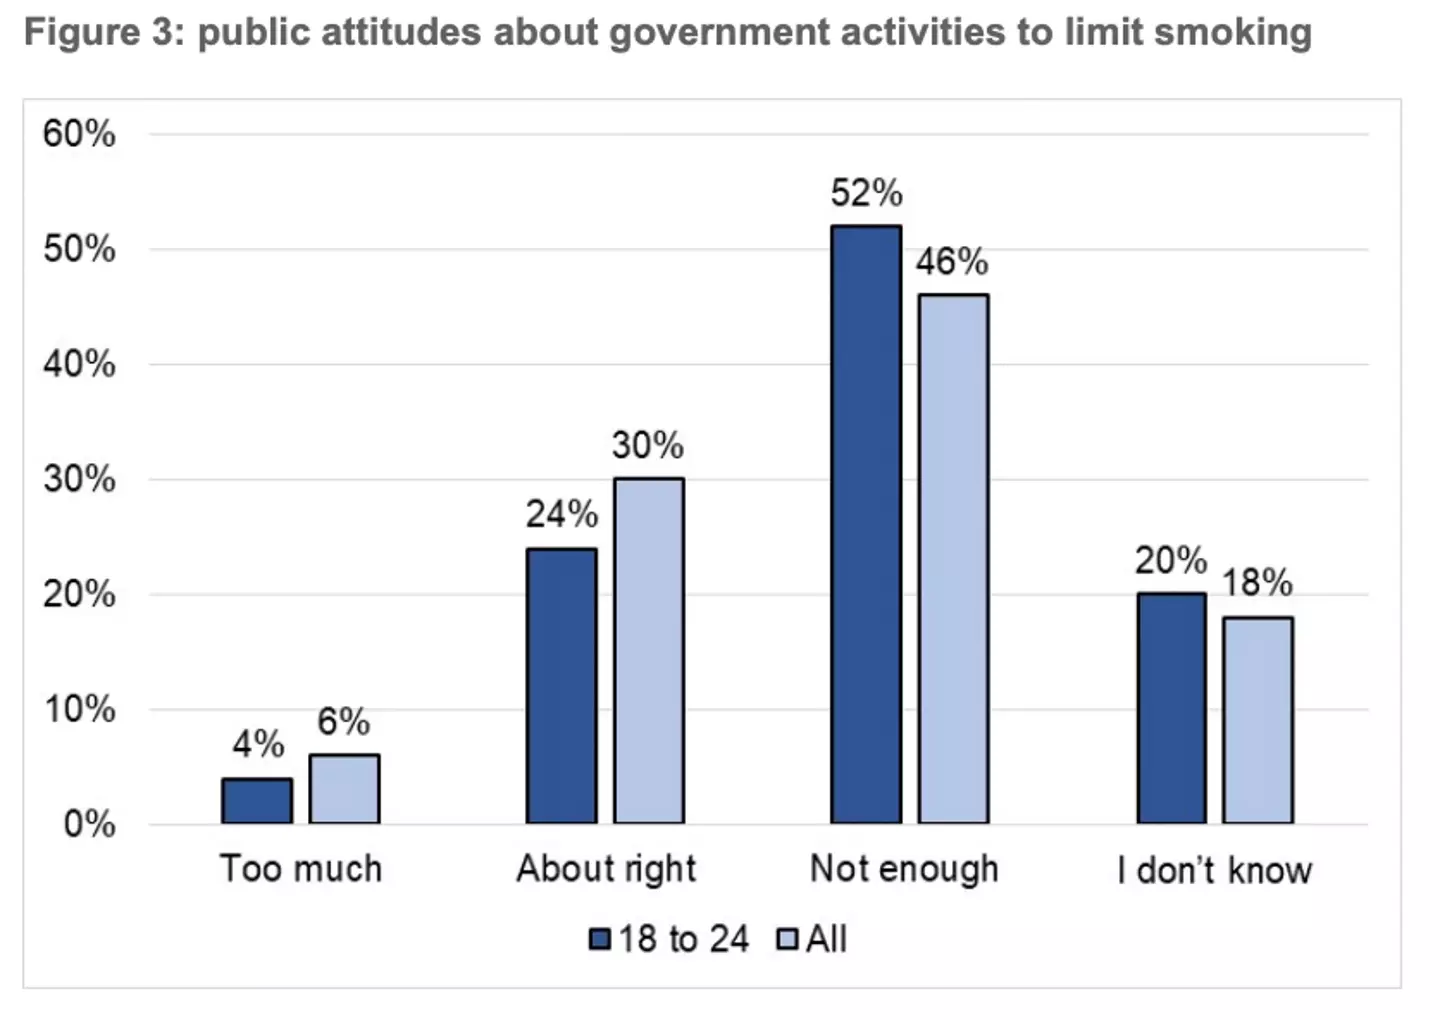 Public attitudes towards limiting smoking.